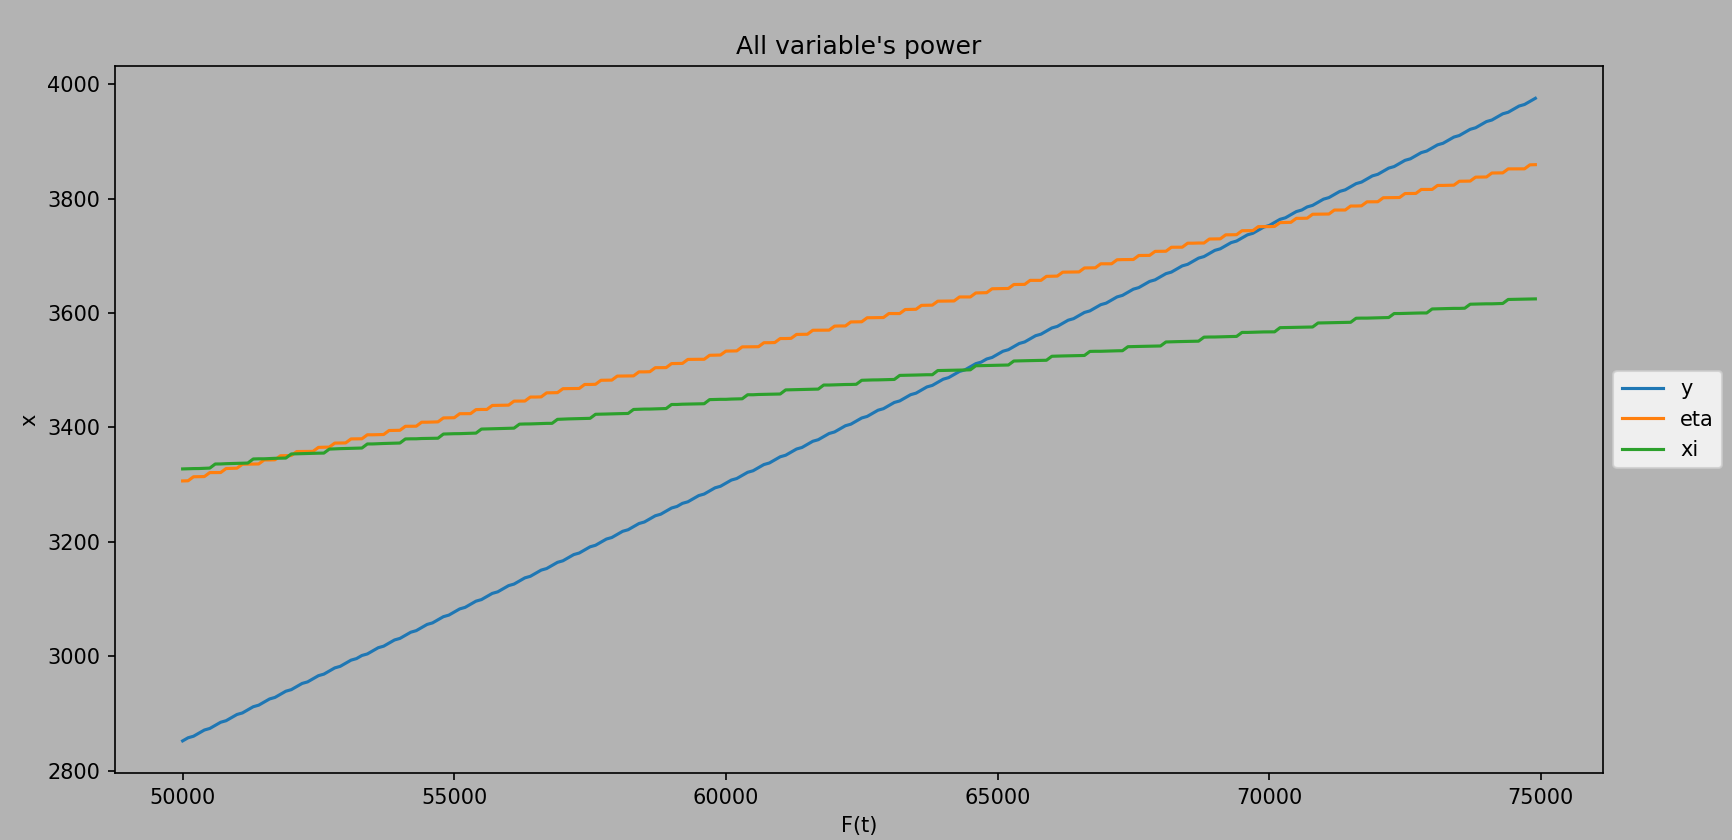 y, eta, and xi variable power